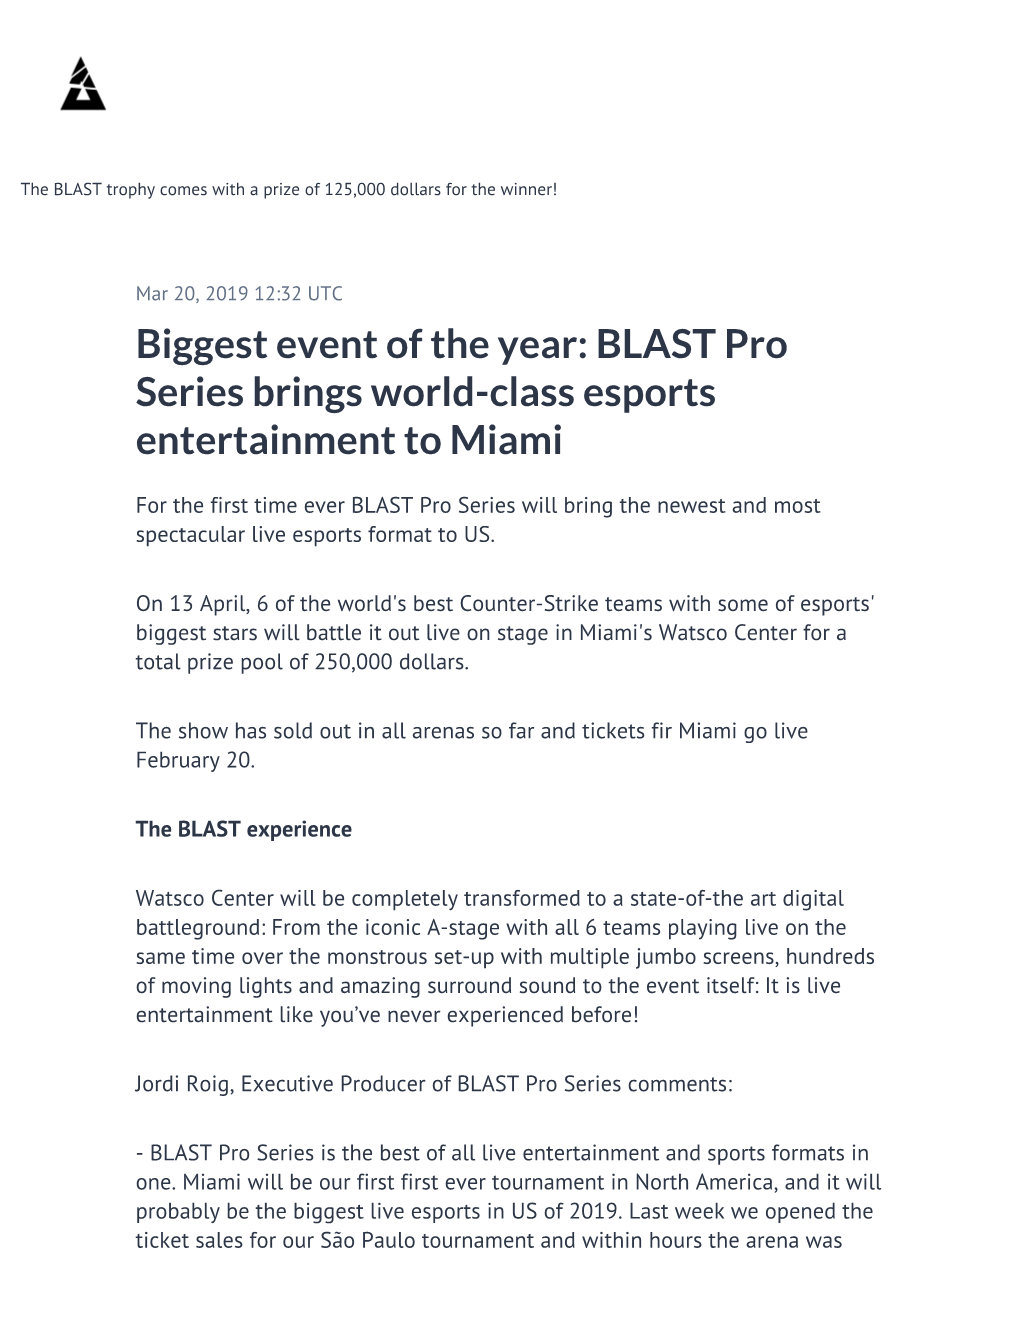 BLAST Pro Series Brings World-Class Esports Entertainment to Miami